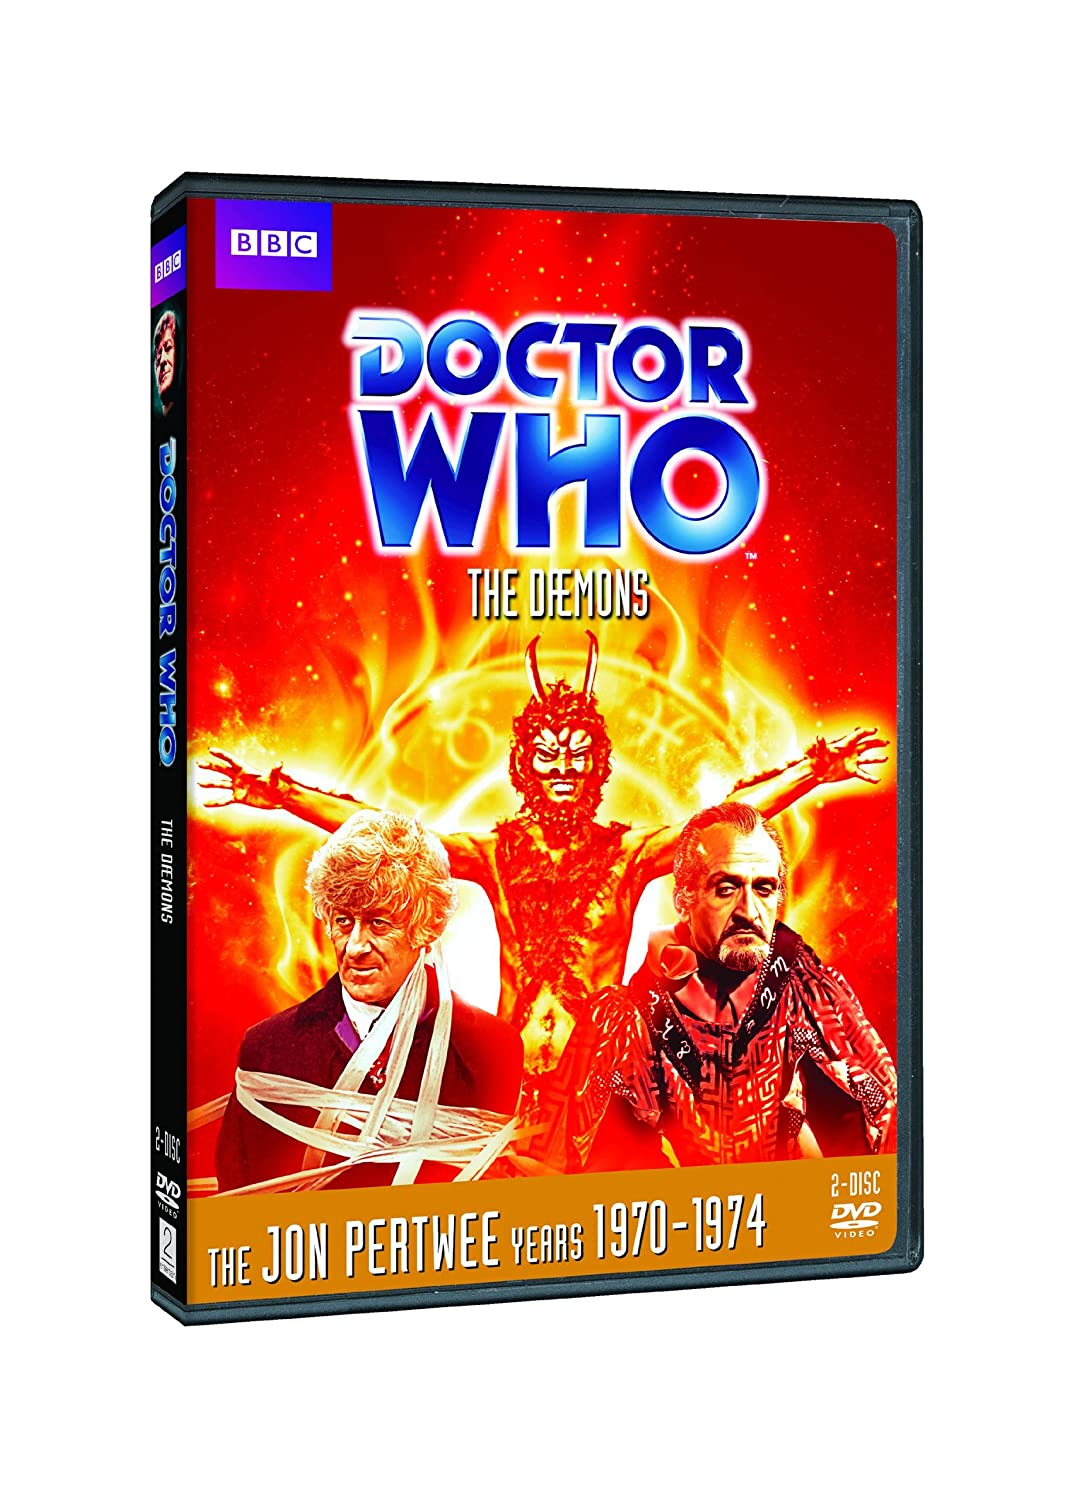 Doctor Who: The Daemons (1971) starring Jon Pertwee, Katy Manning, Roger Delgado, Nicholas Courtney